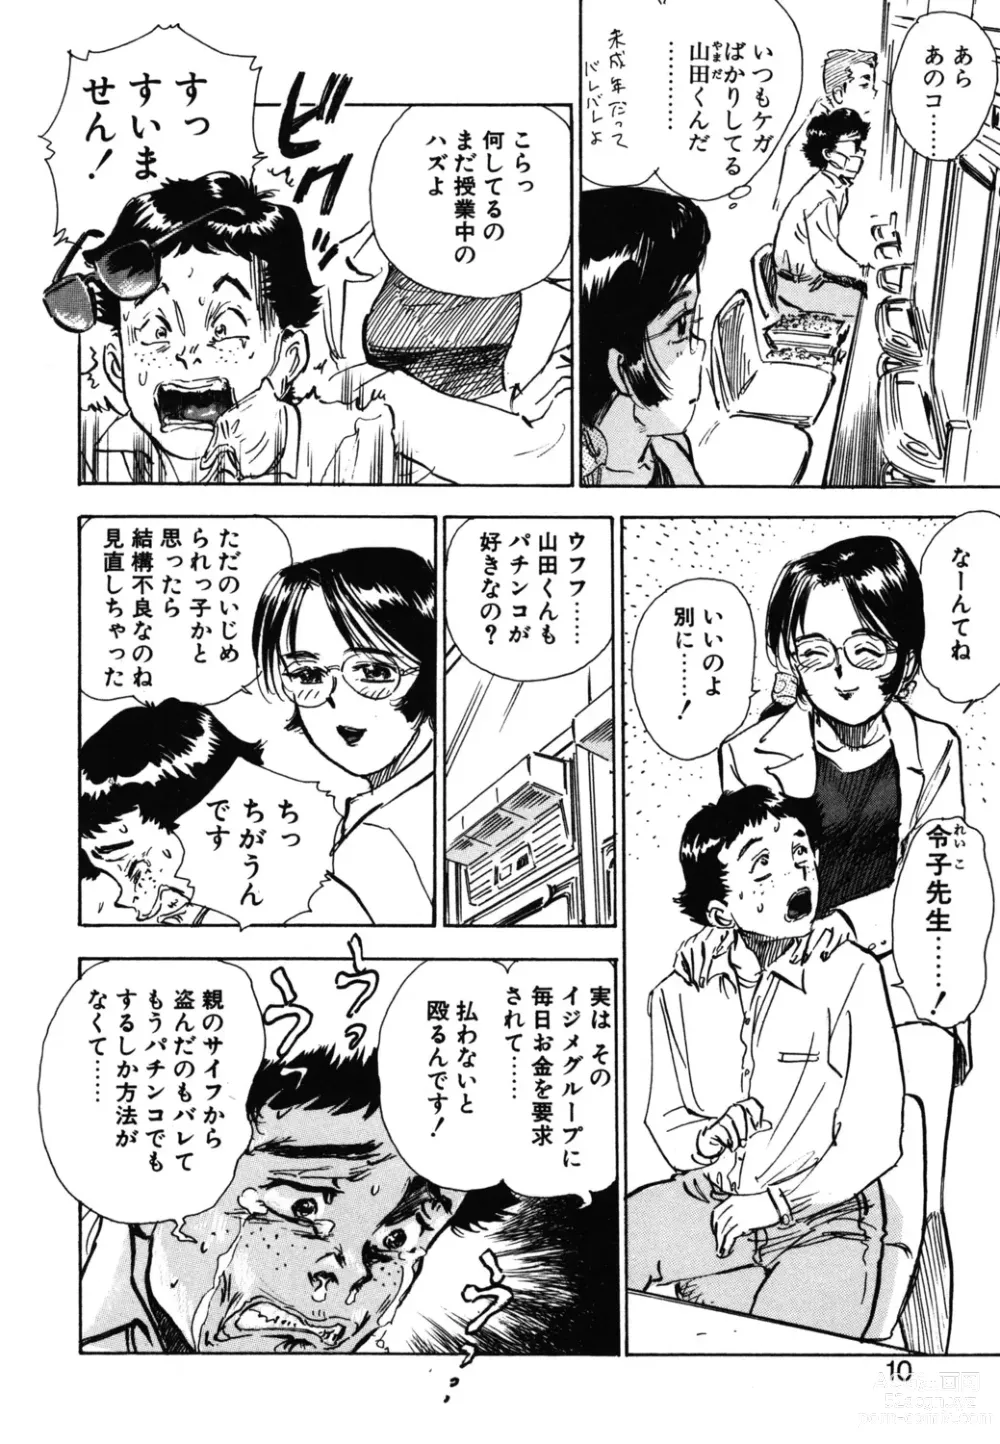 Page 8 of manga Abunai Reiko Sensei 1